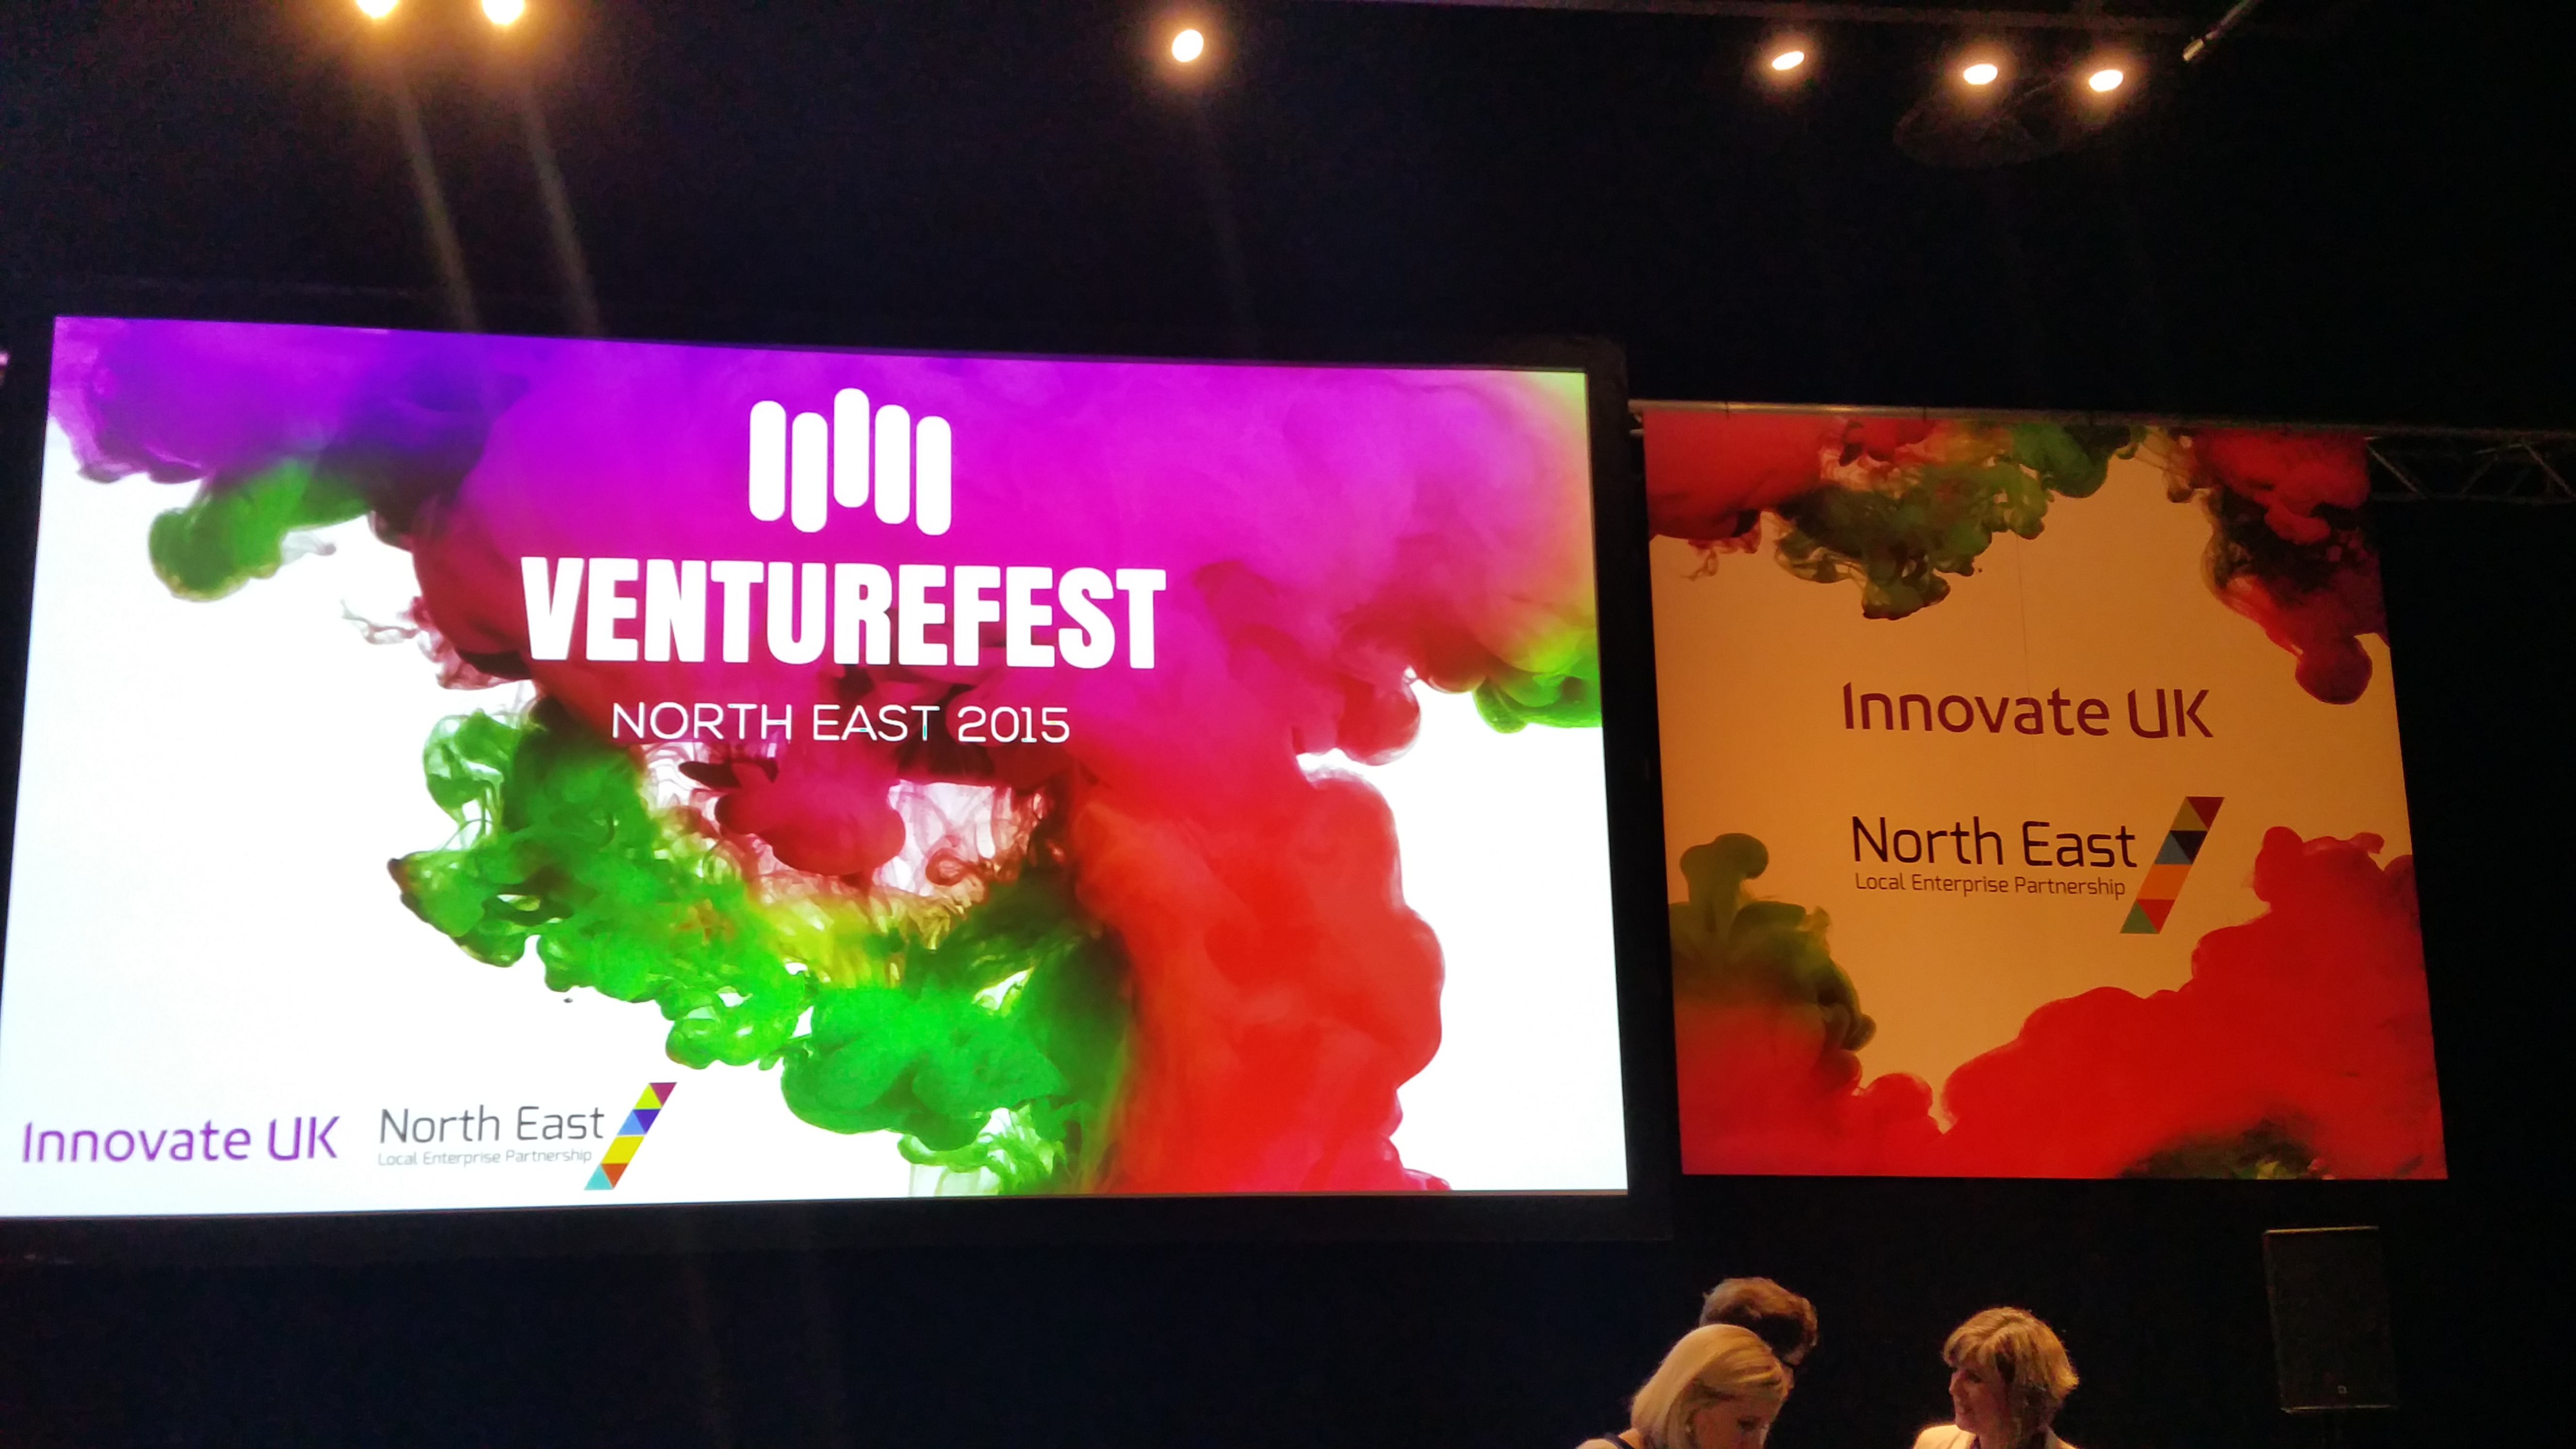 Venturefest North East: a UK innovation hub